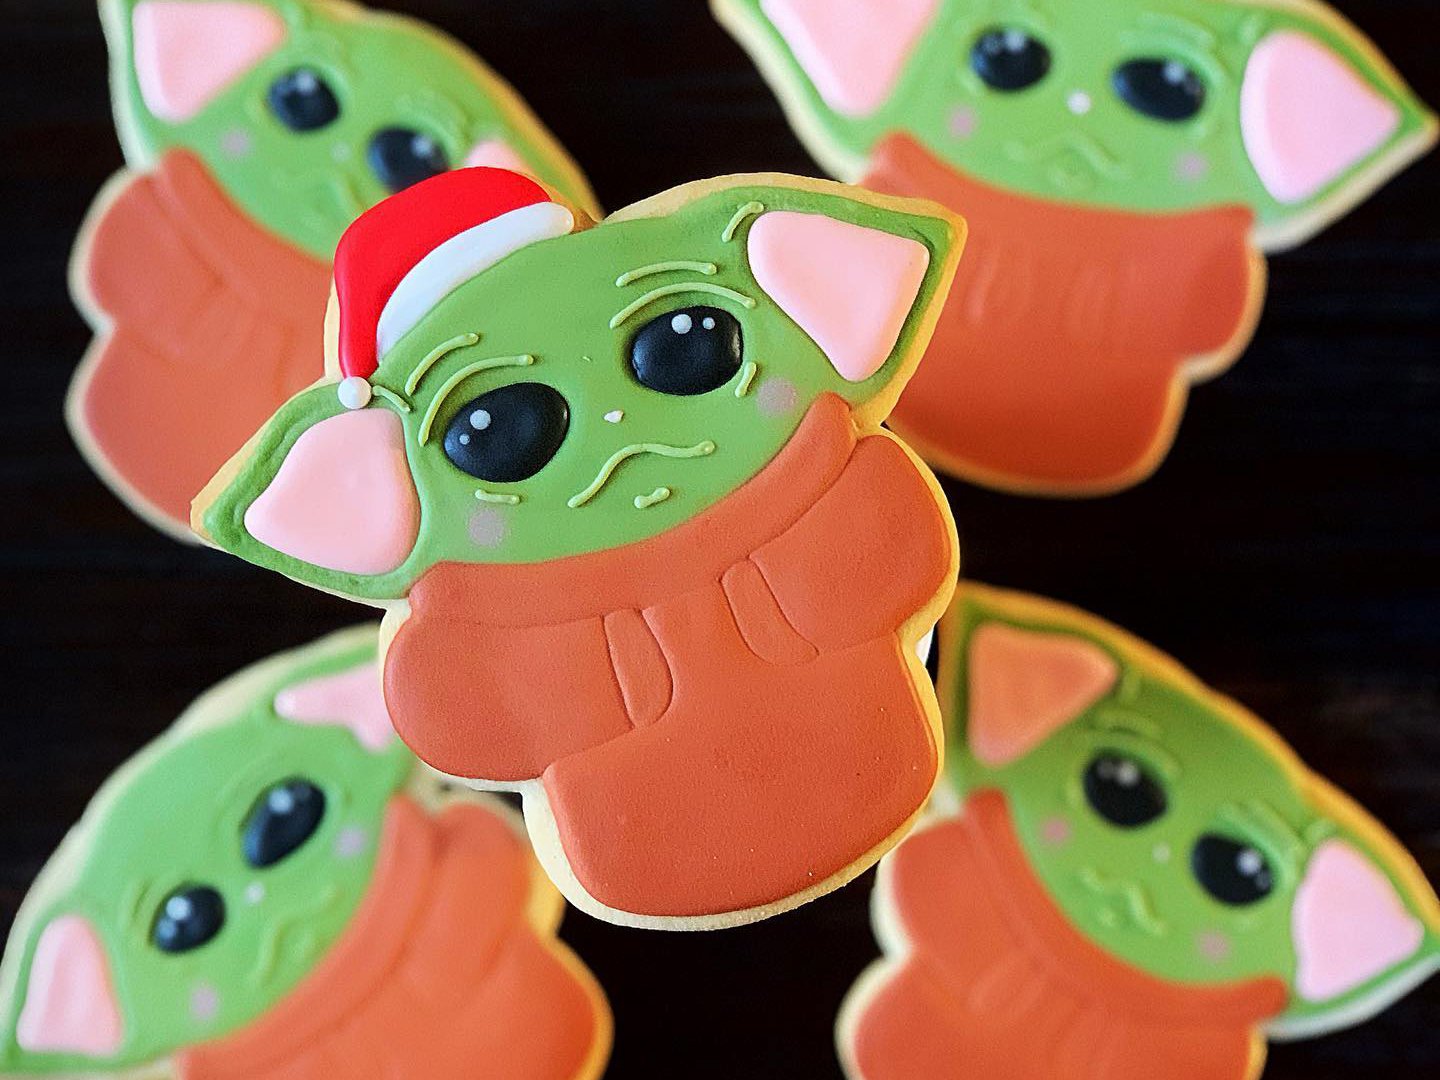 Baby Yoda cookies